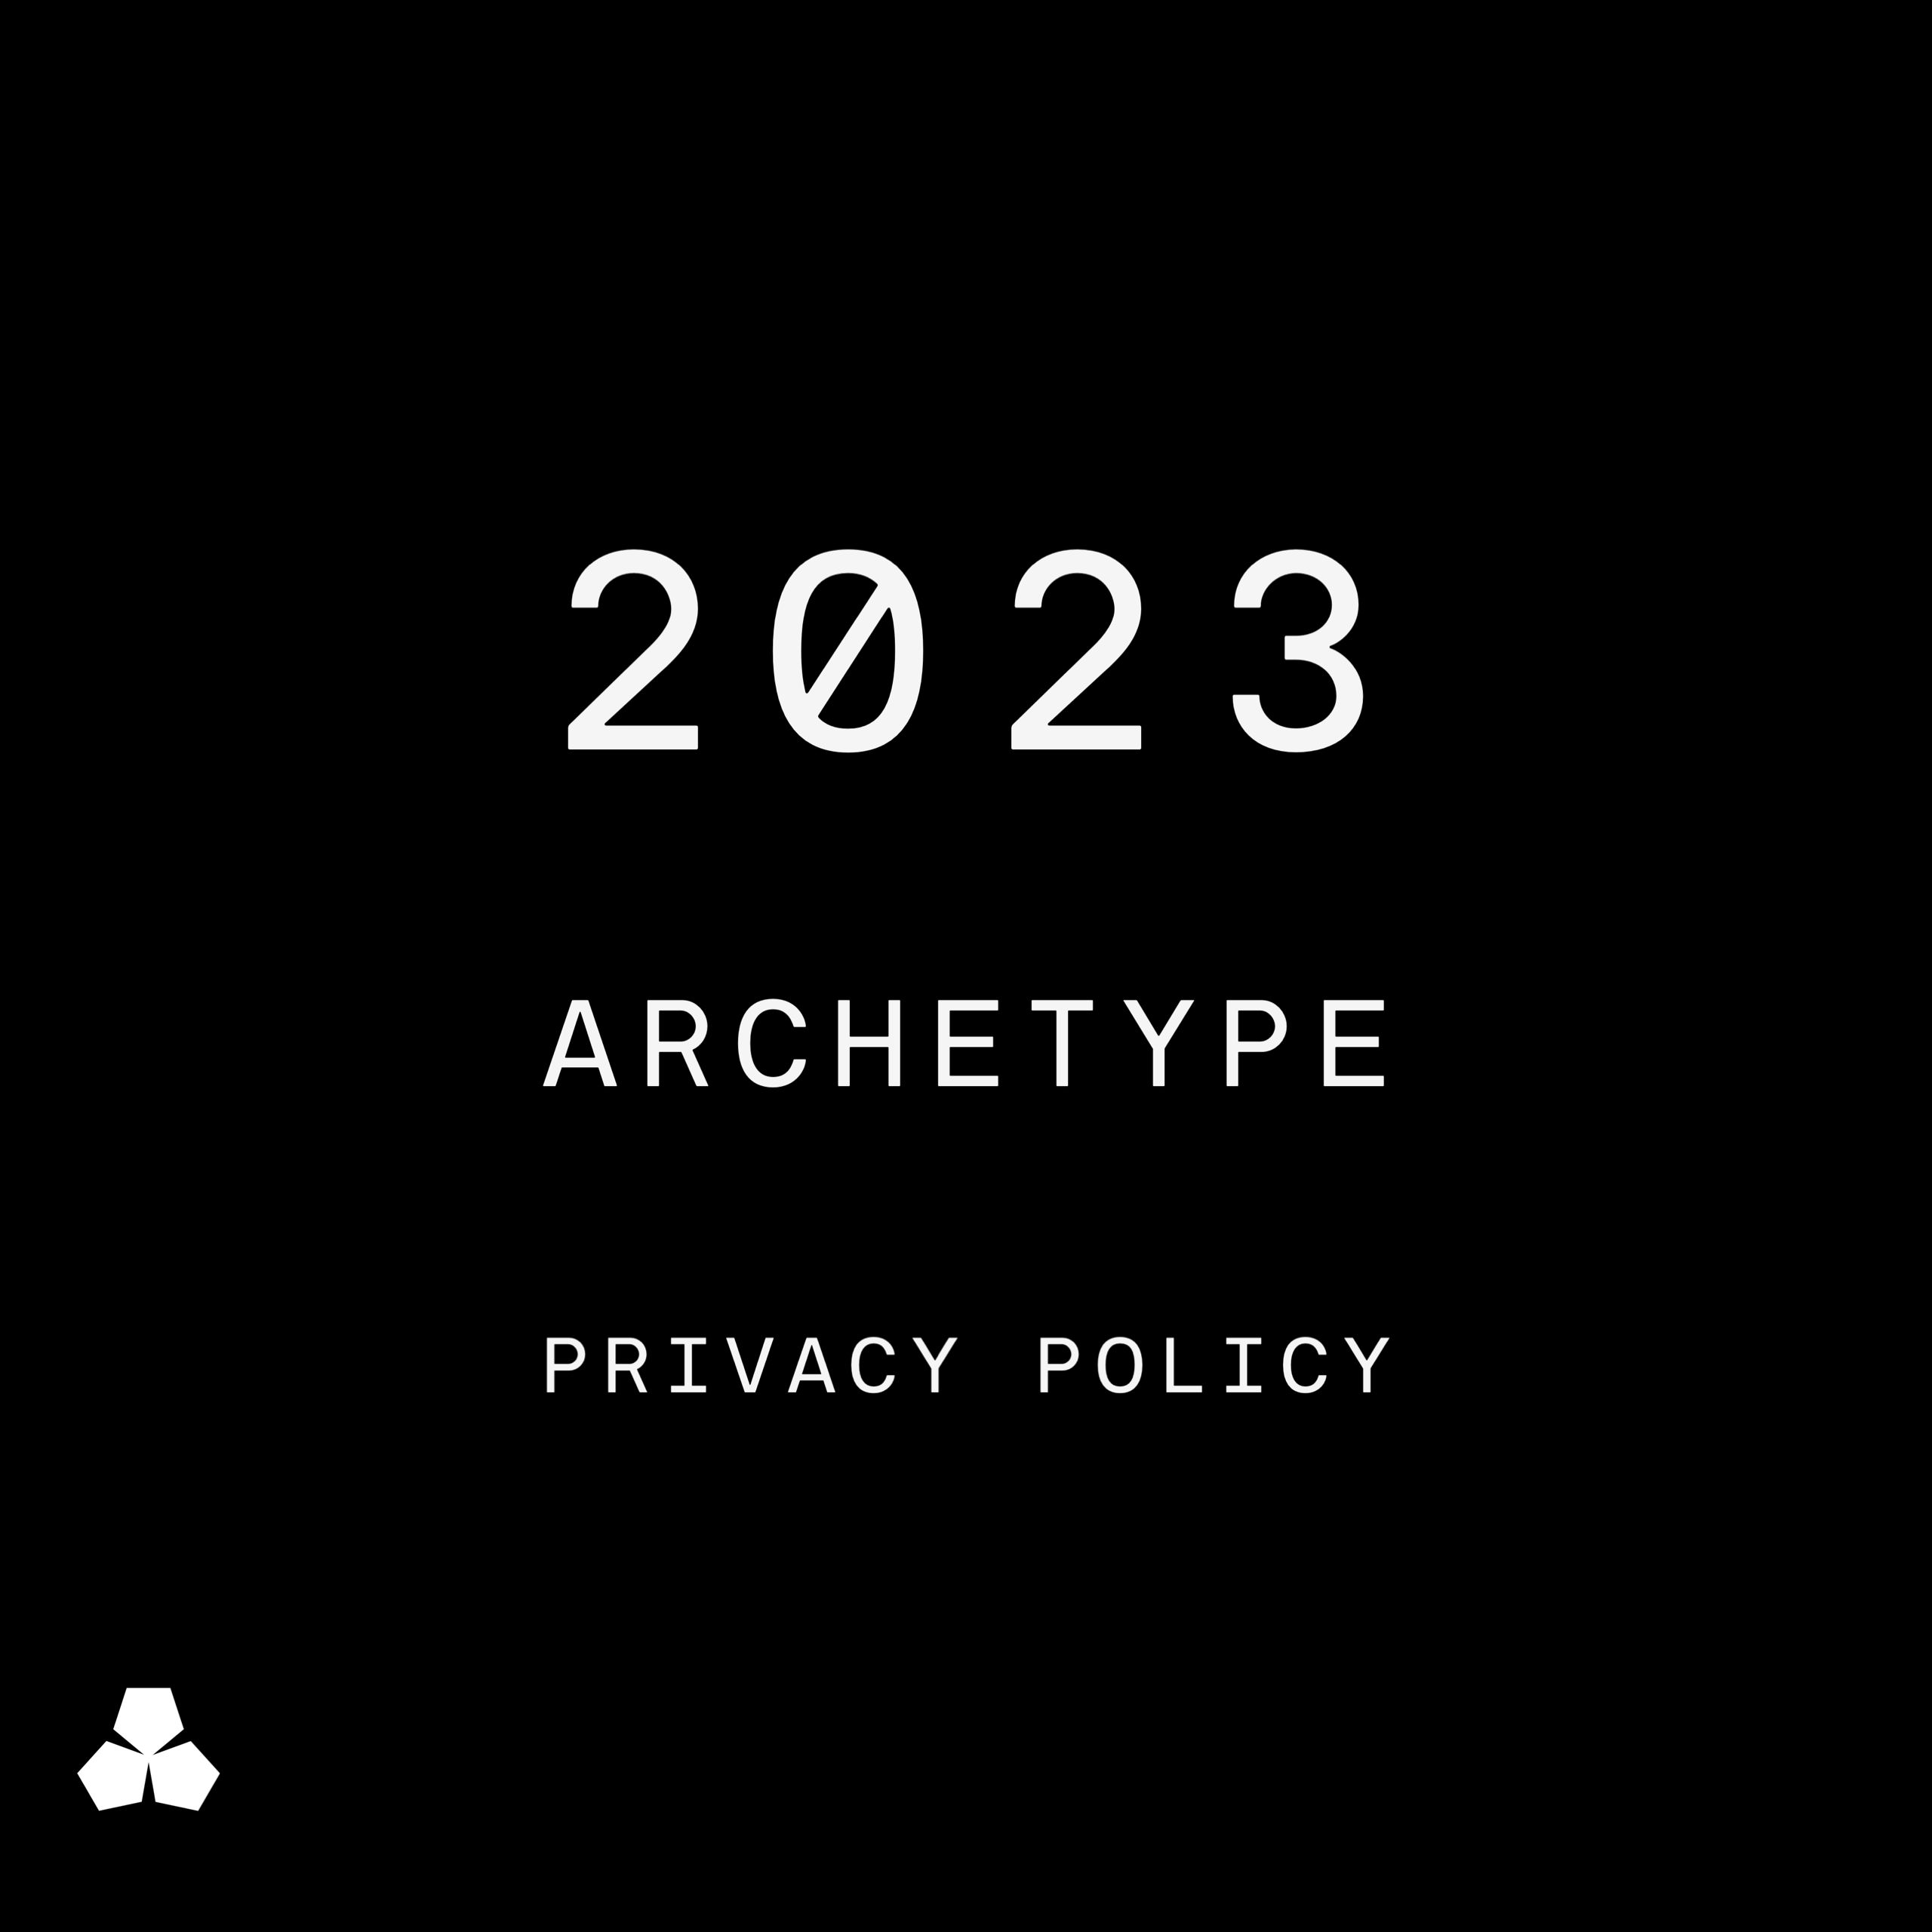 Privacy Policy / HIPAA 2023